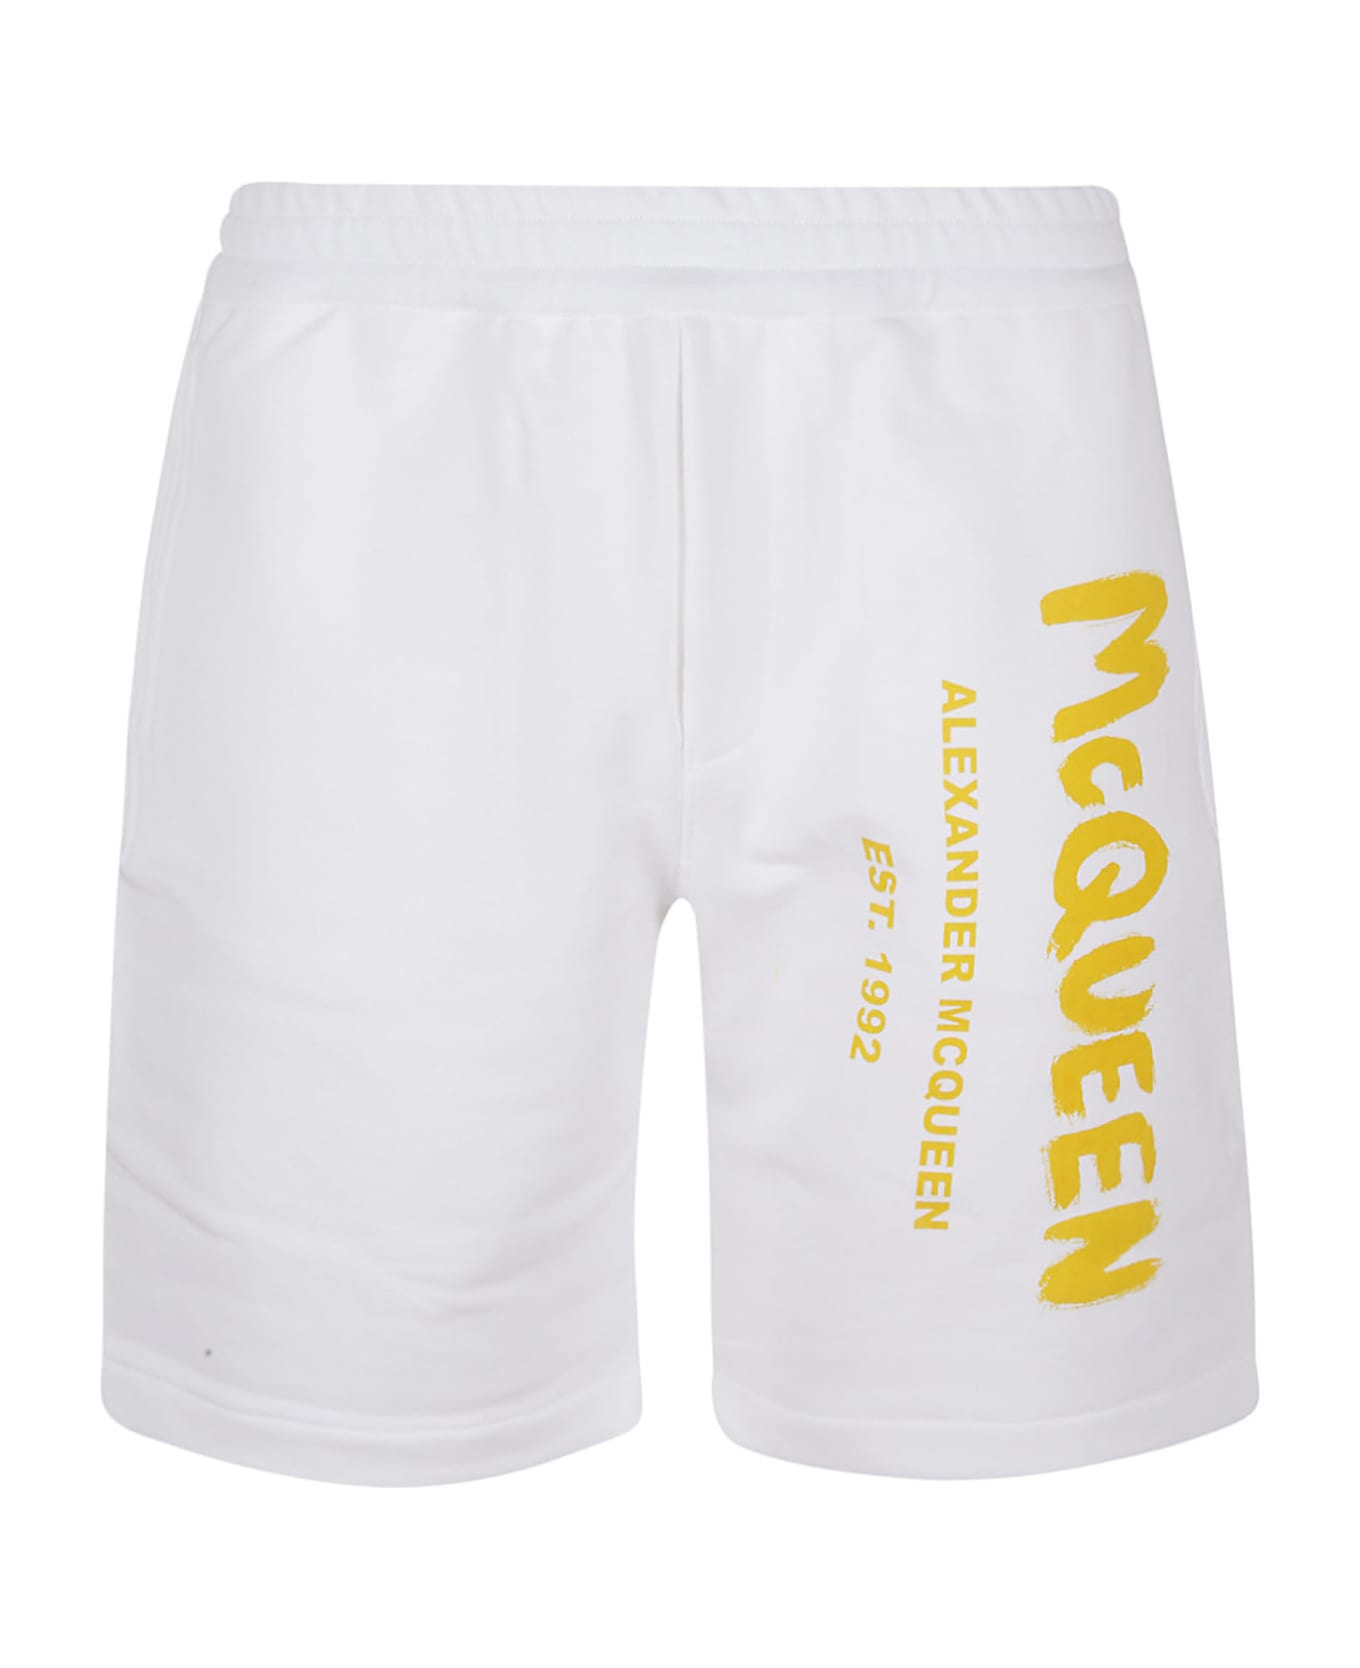 Alexander McQueen Graffiti Prt Shorts - White Yellow ショートパンツ